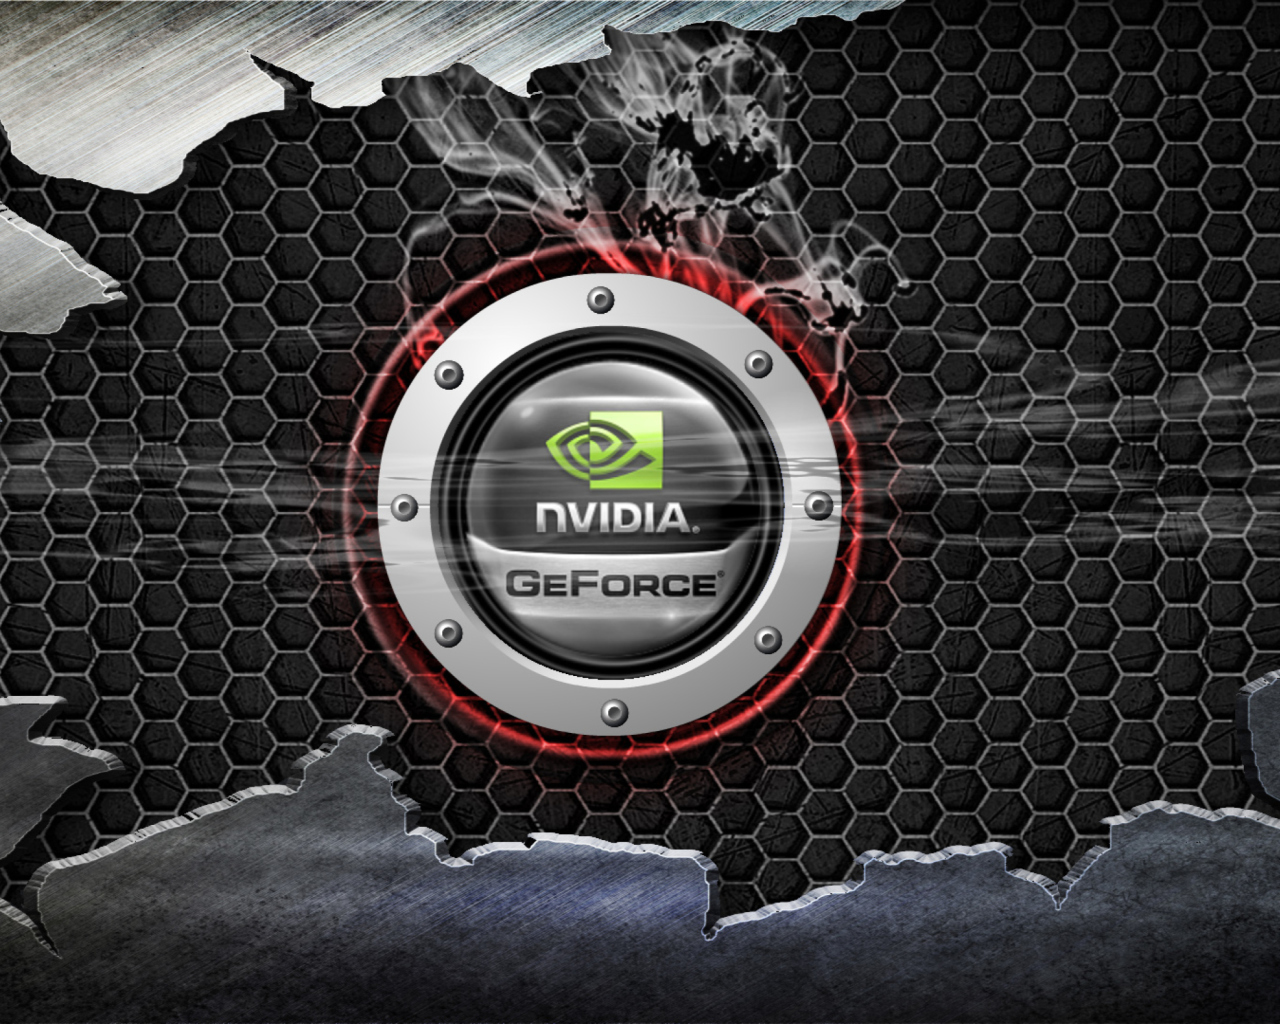 Nvidia Geforce wallpaper 1280x1024